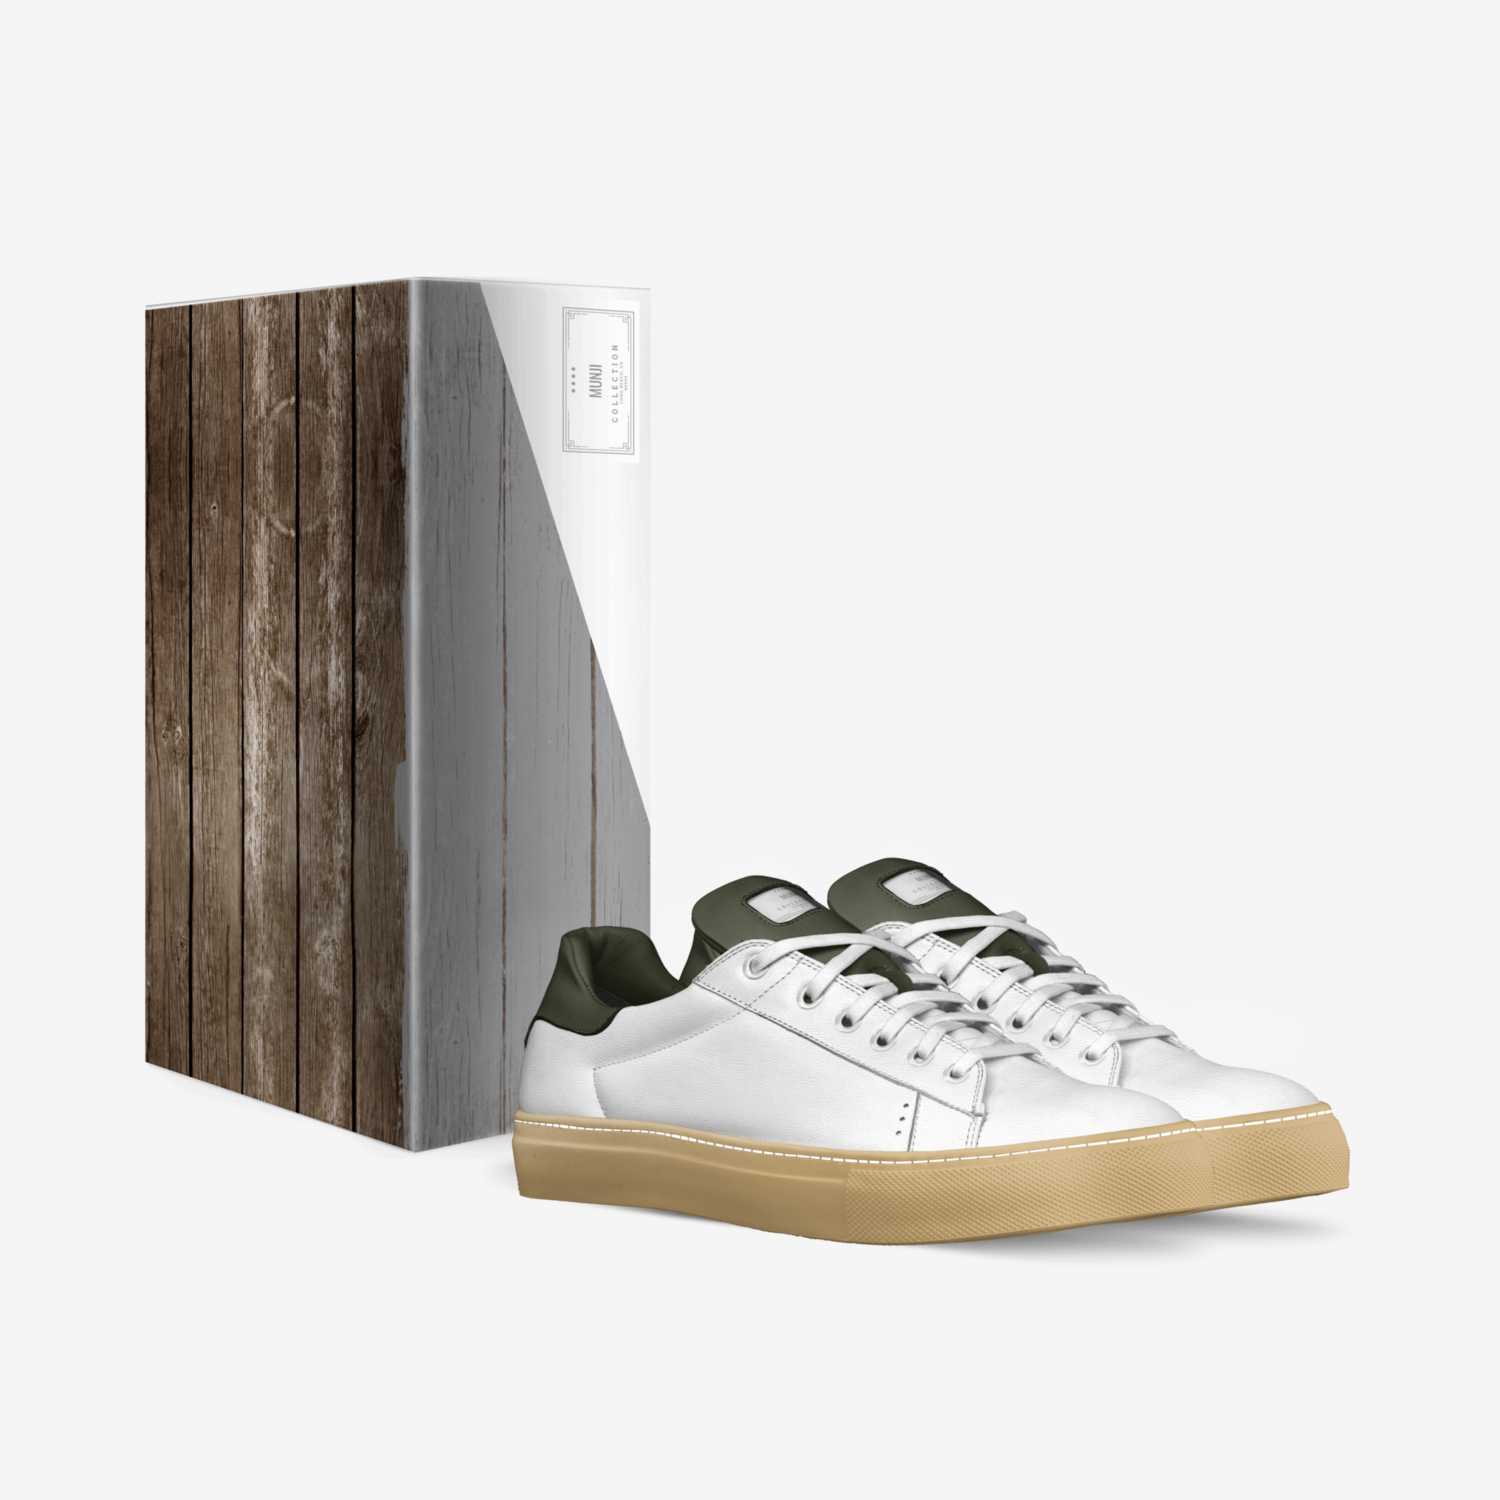 Munji custom made in Italy shoes by Nico Hagopian | Box view